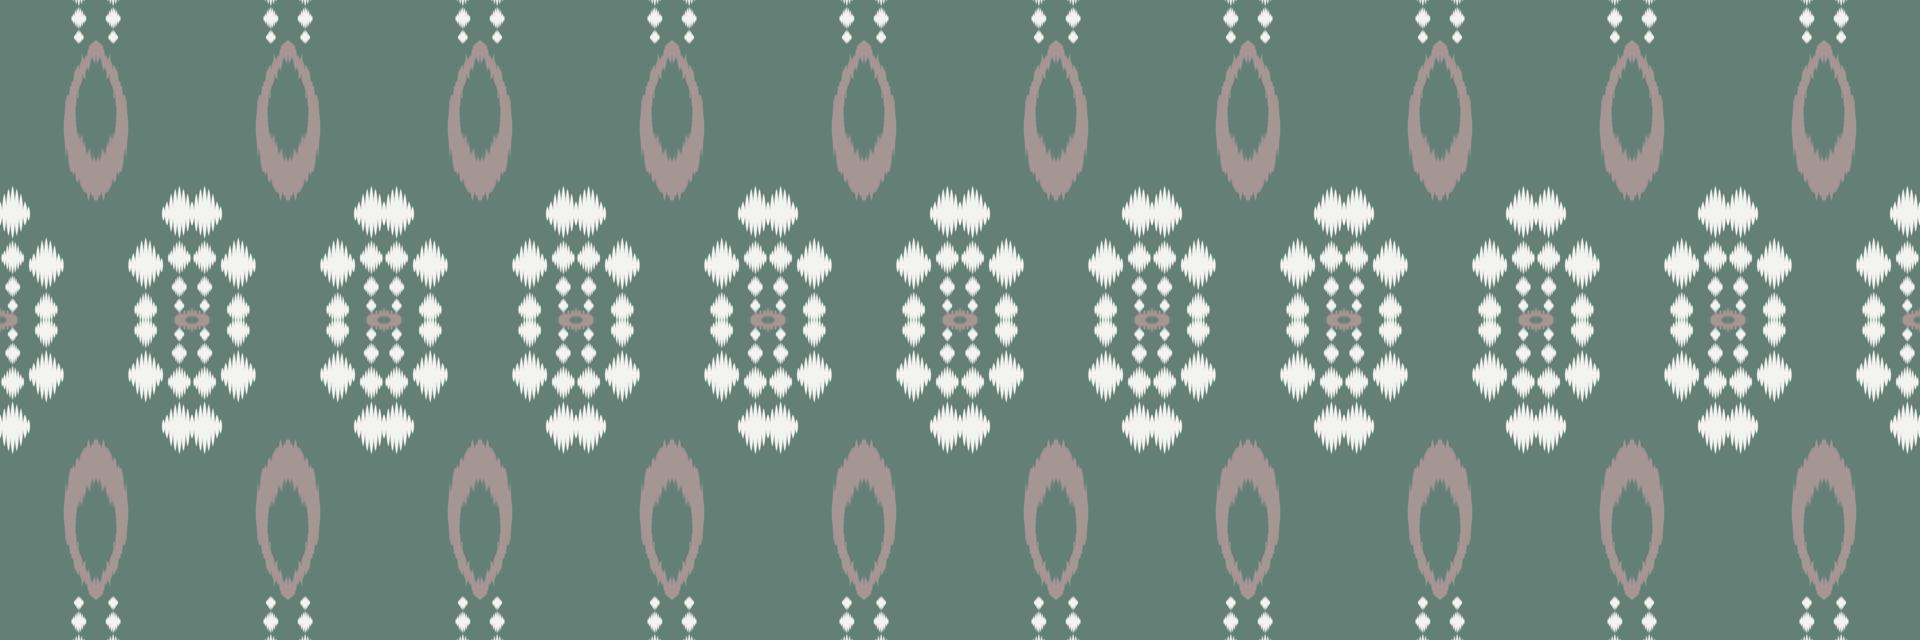 ikat senza soluzione di continuità tribale astratto senza soluzione di continuità modello. etnico geometrico batik ikkat digitale vettore tessile design per stampe tessuto saree Mughal spazzola simbolo andane struttura Kurti kurtis kurtas